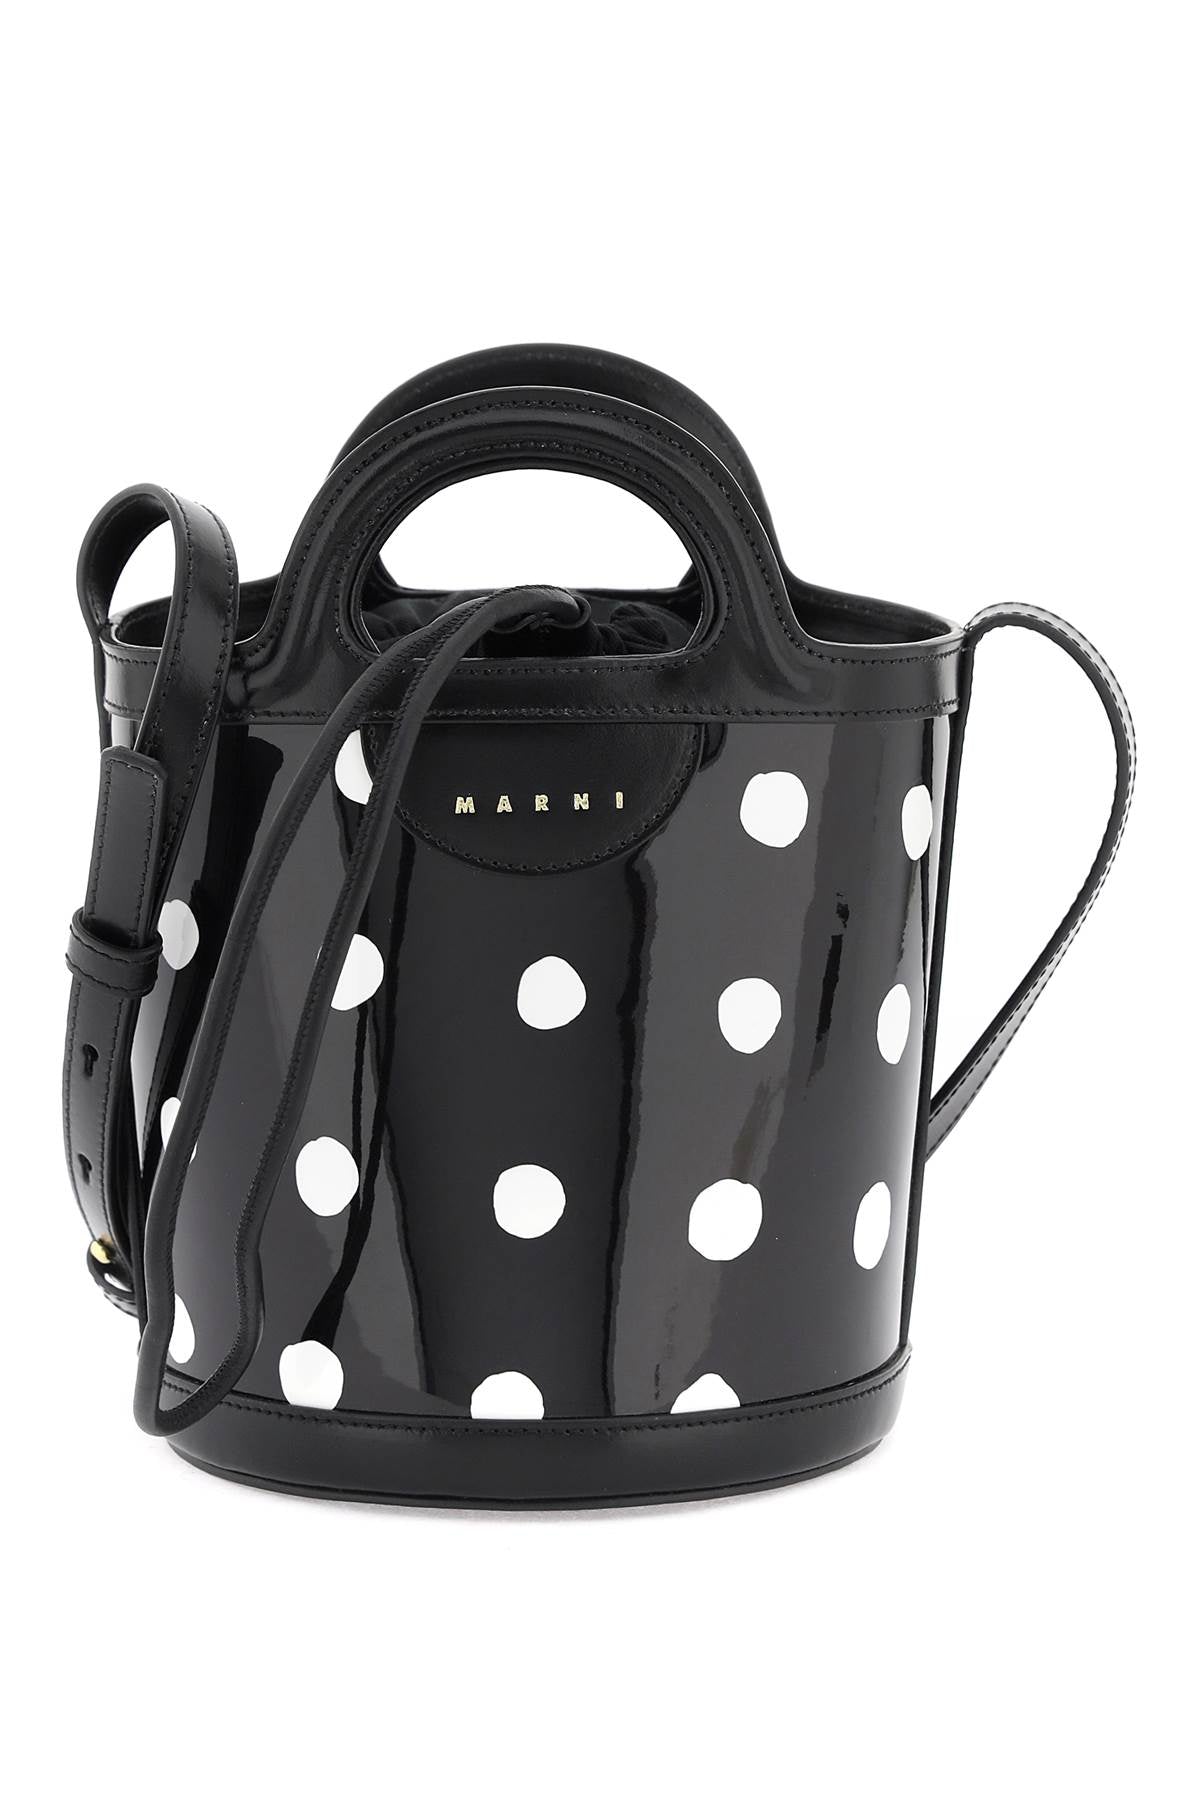 MARNI Polka-Dot Patent Leather Bucket Handbag for Women